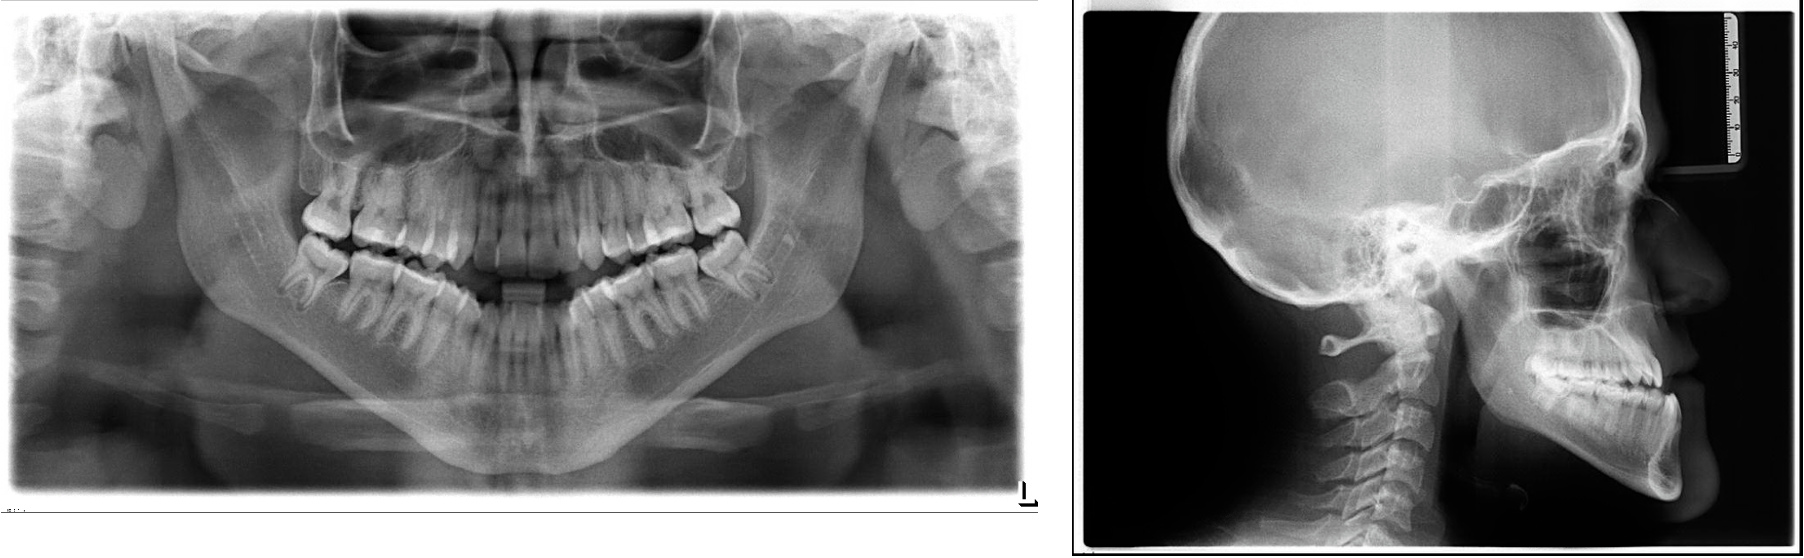 Corrective Jaw Surgery Before Xray